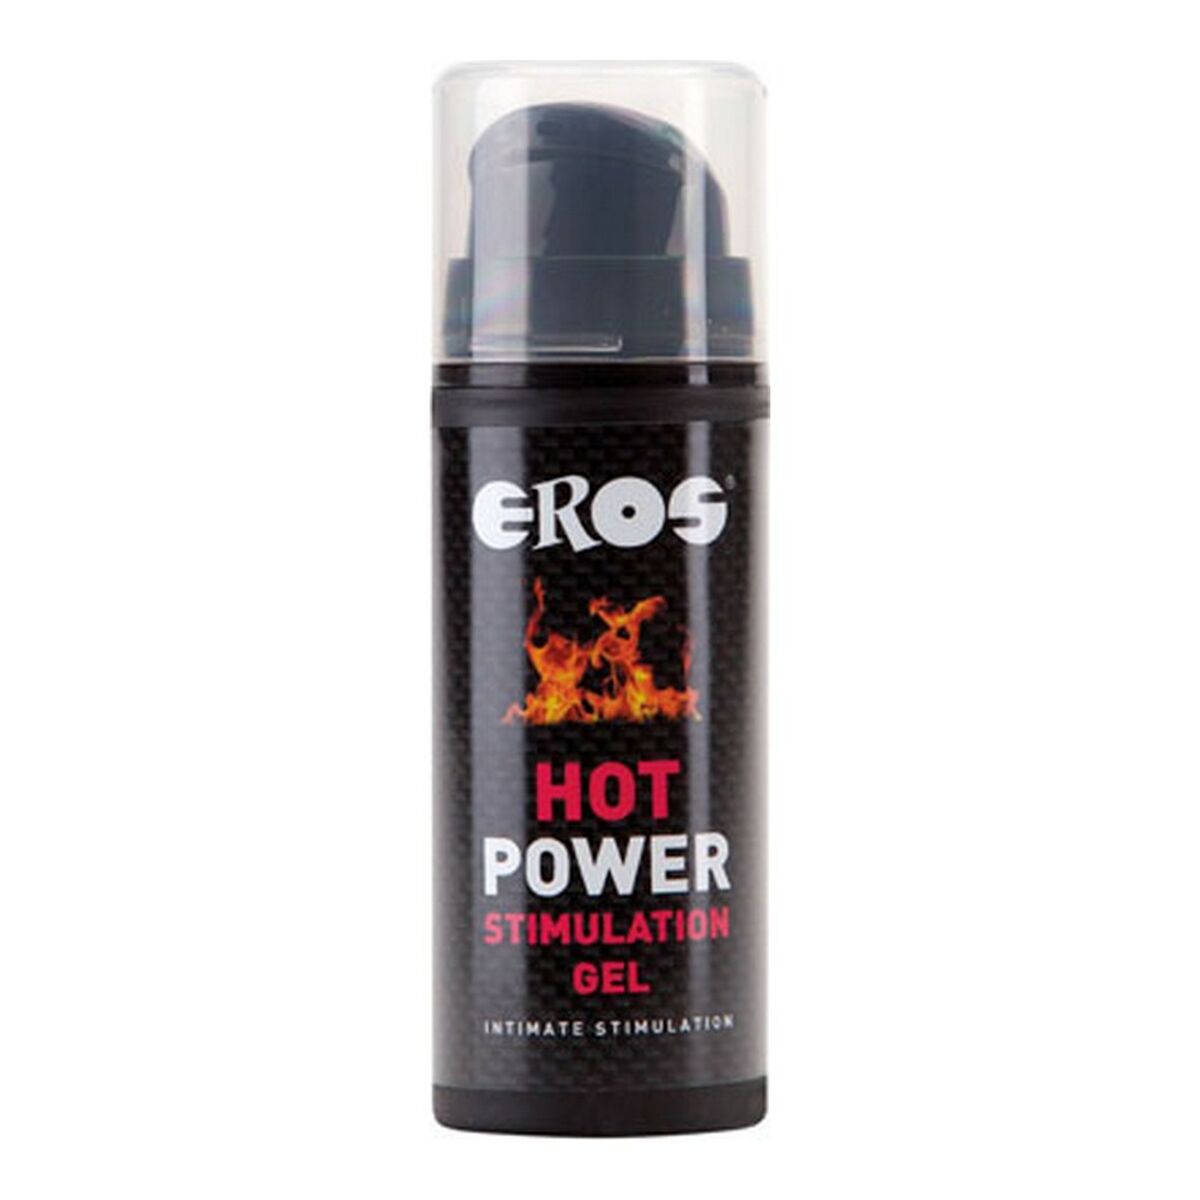 Kaufe Stimulationsgel Hot Power Eros 30 ml bei AWK Flagship um € 30.00